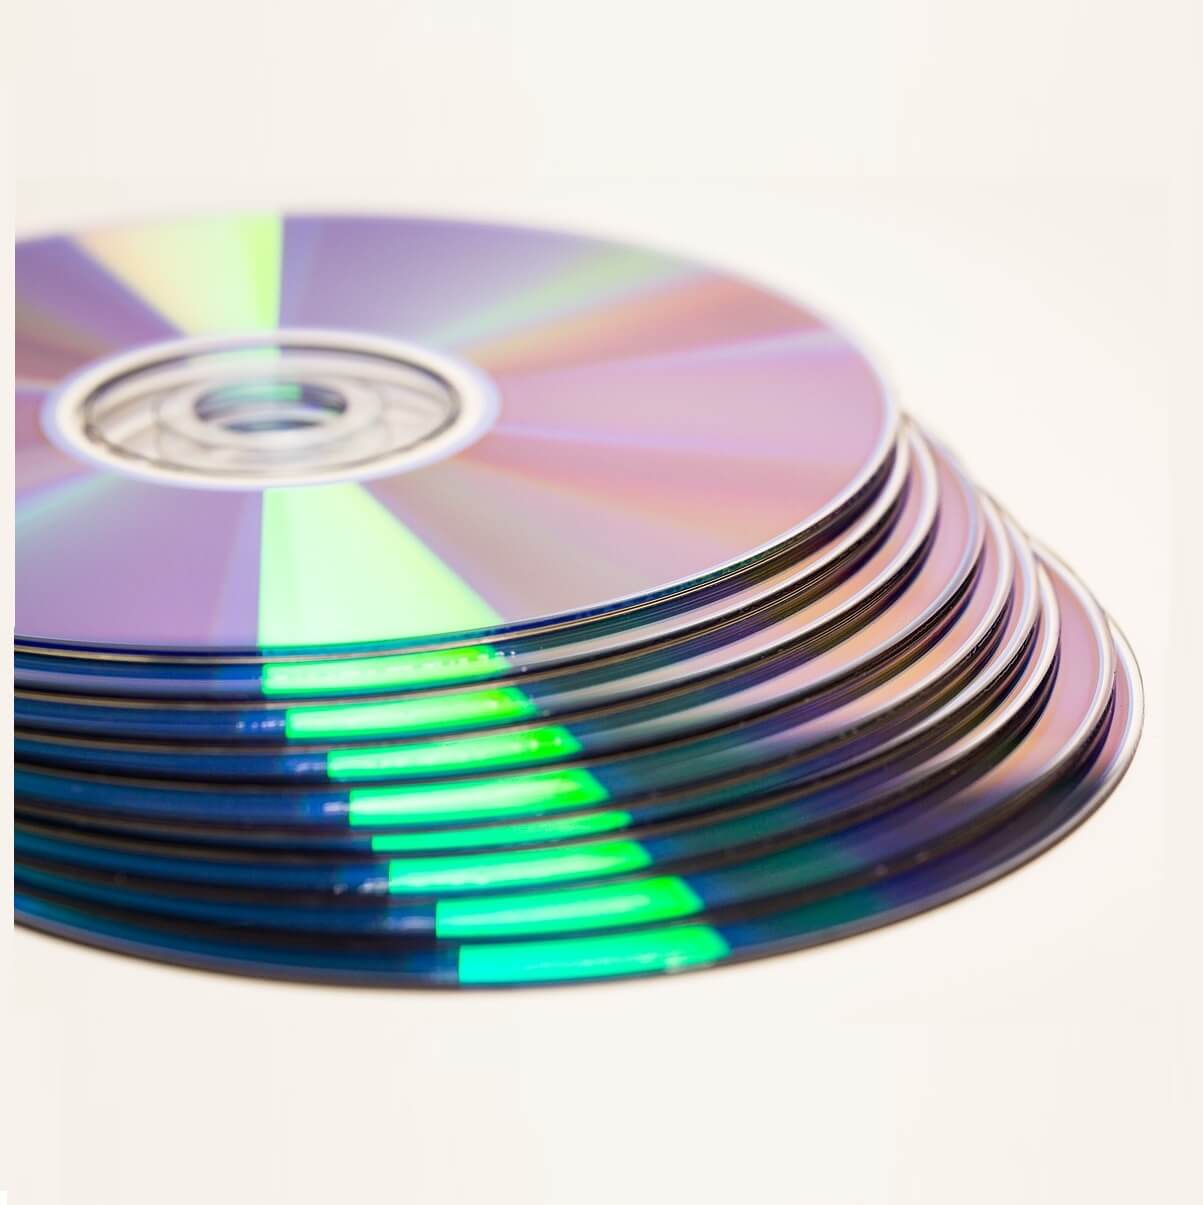 encryption software CDs DVDs